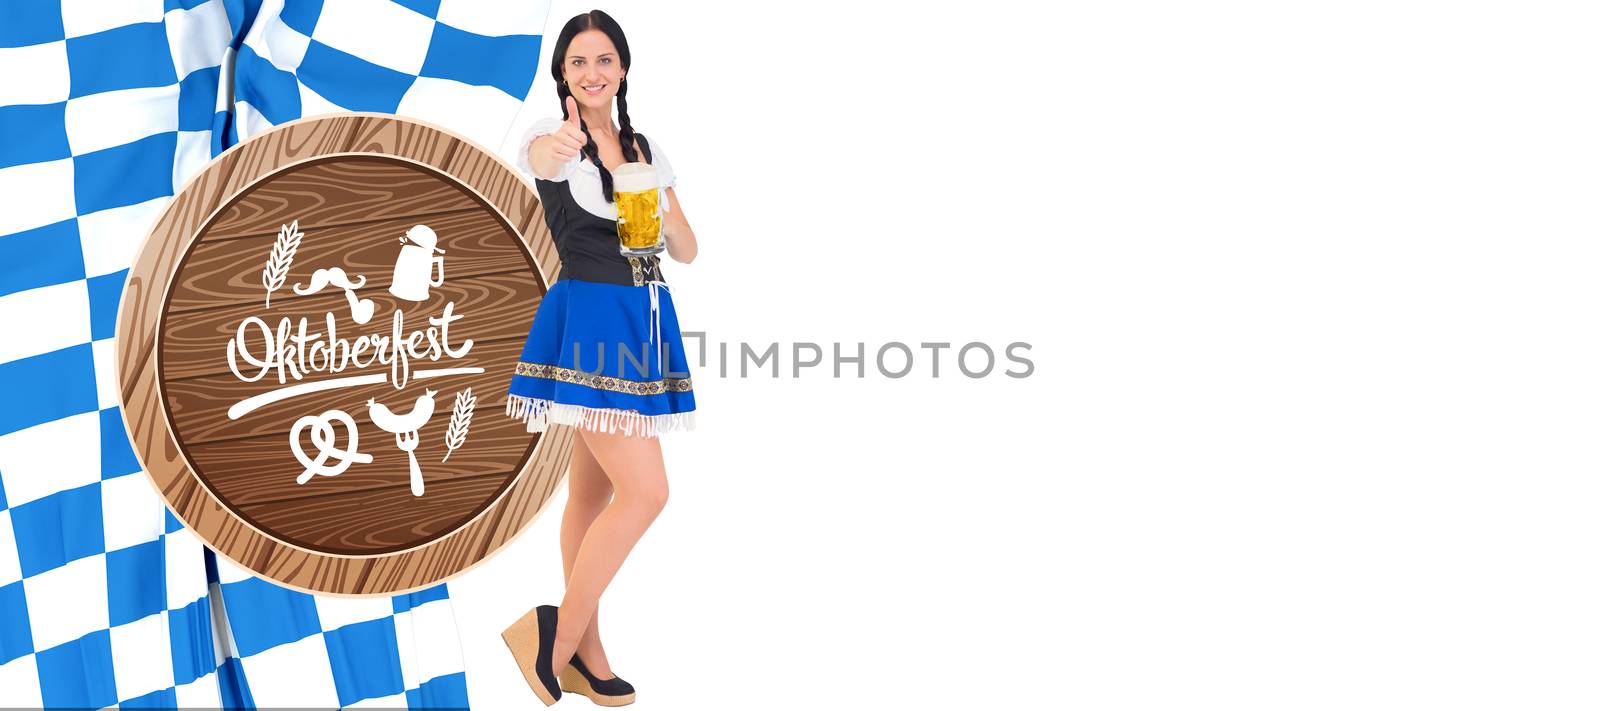 Pretty oktoberfest girl holding beer tankard against oktoberfest graphics